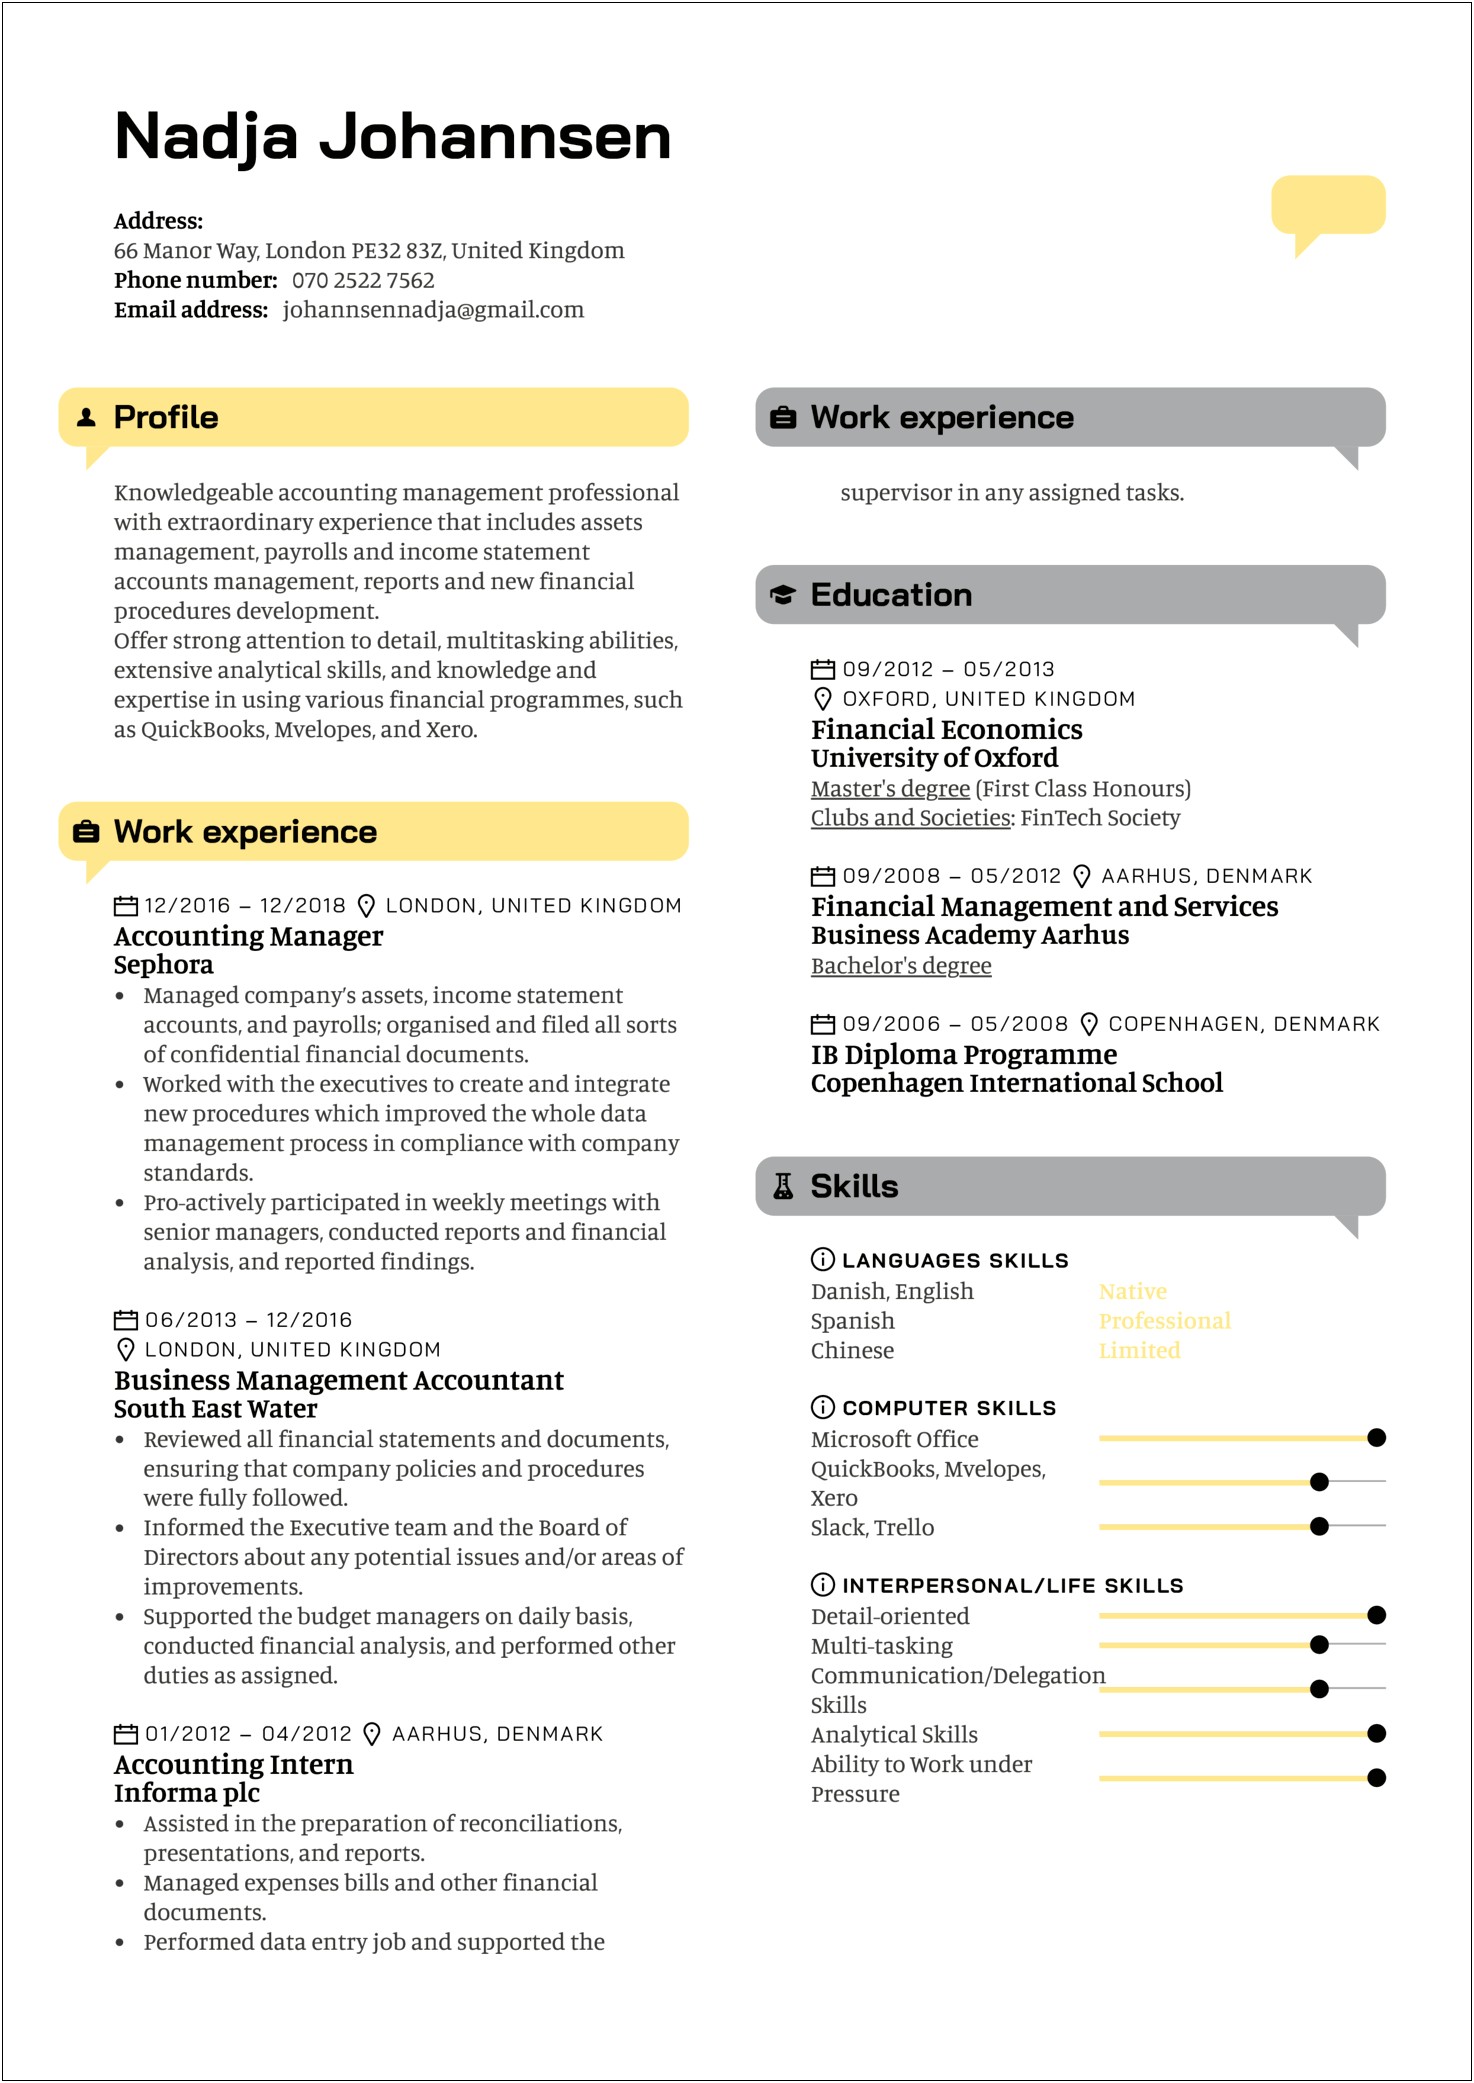 Accounting Intern Job Description For Resume